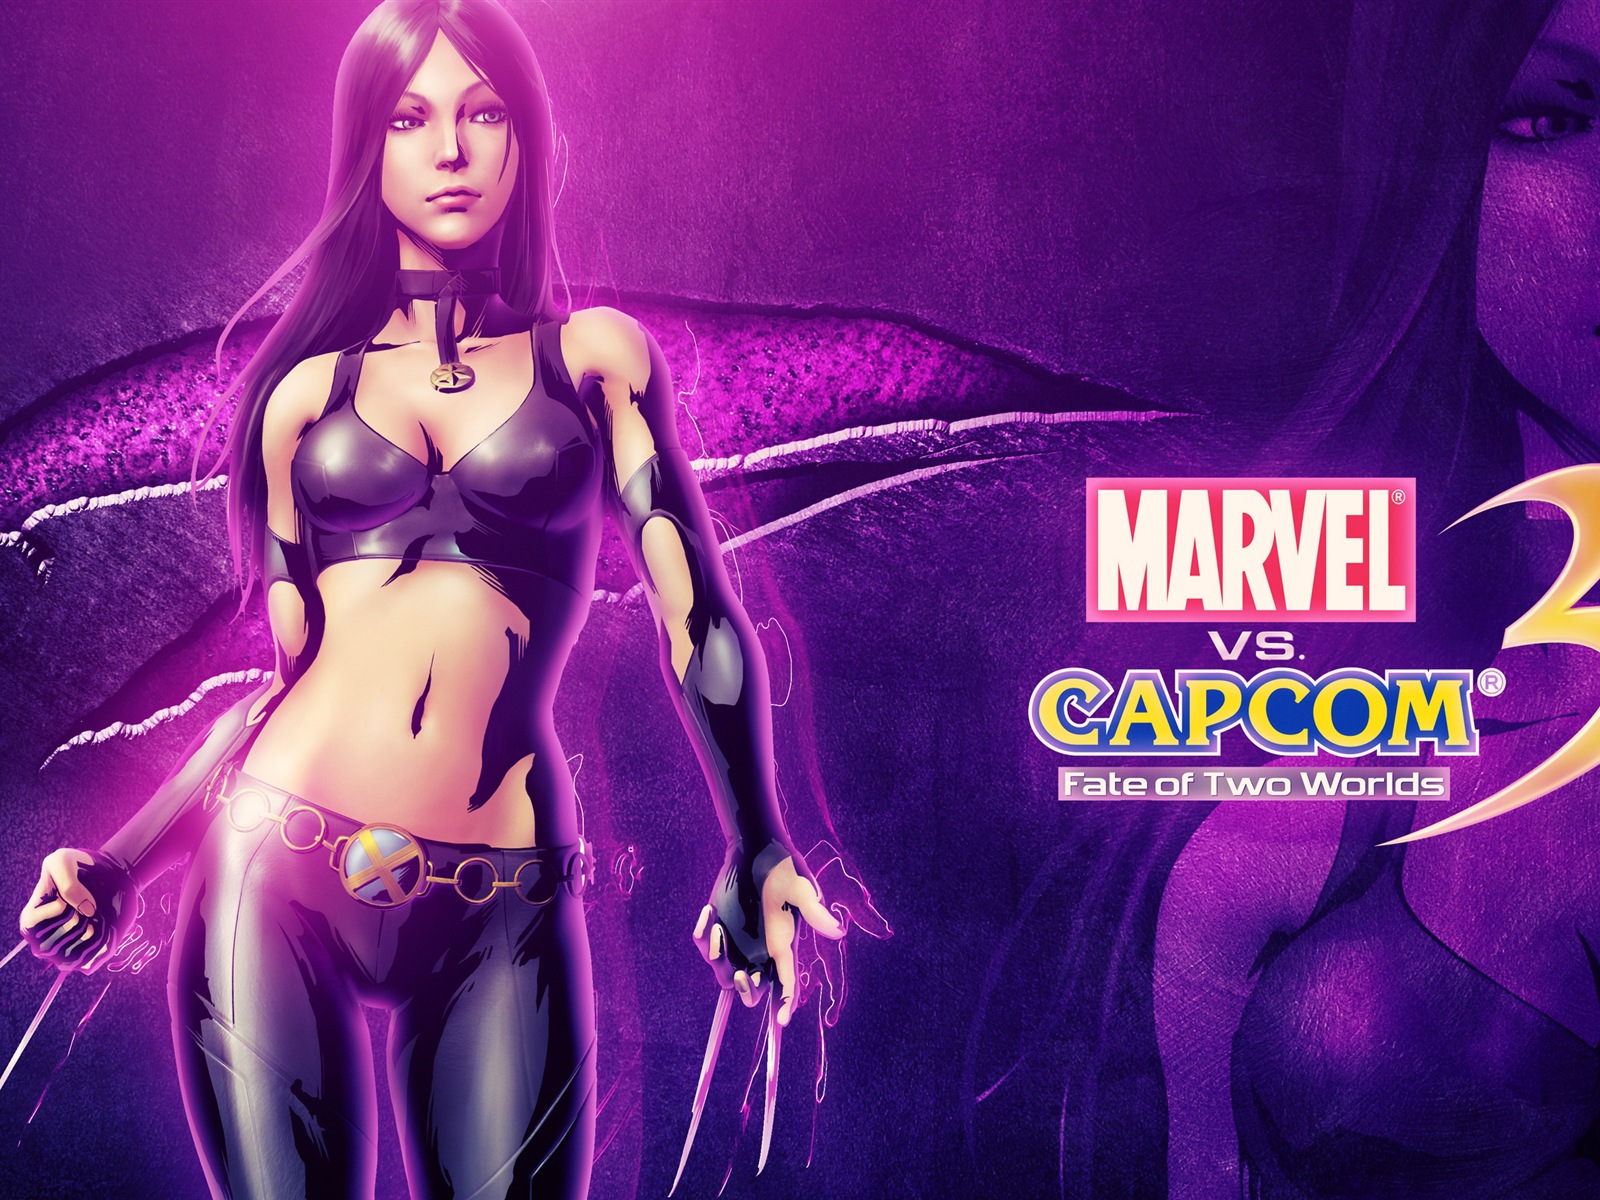 Marvel VS. Capcom 3: Fate of Two Worlds 漫畫英雄VS.卡普空3 高清遊戲壁紙 #10 - 1600x1200